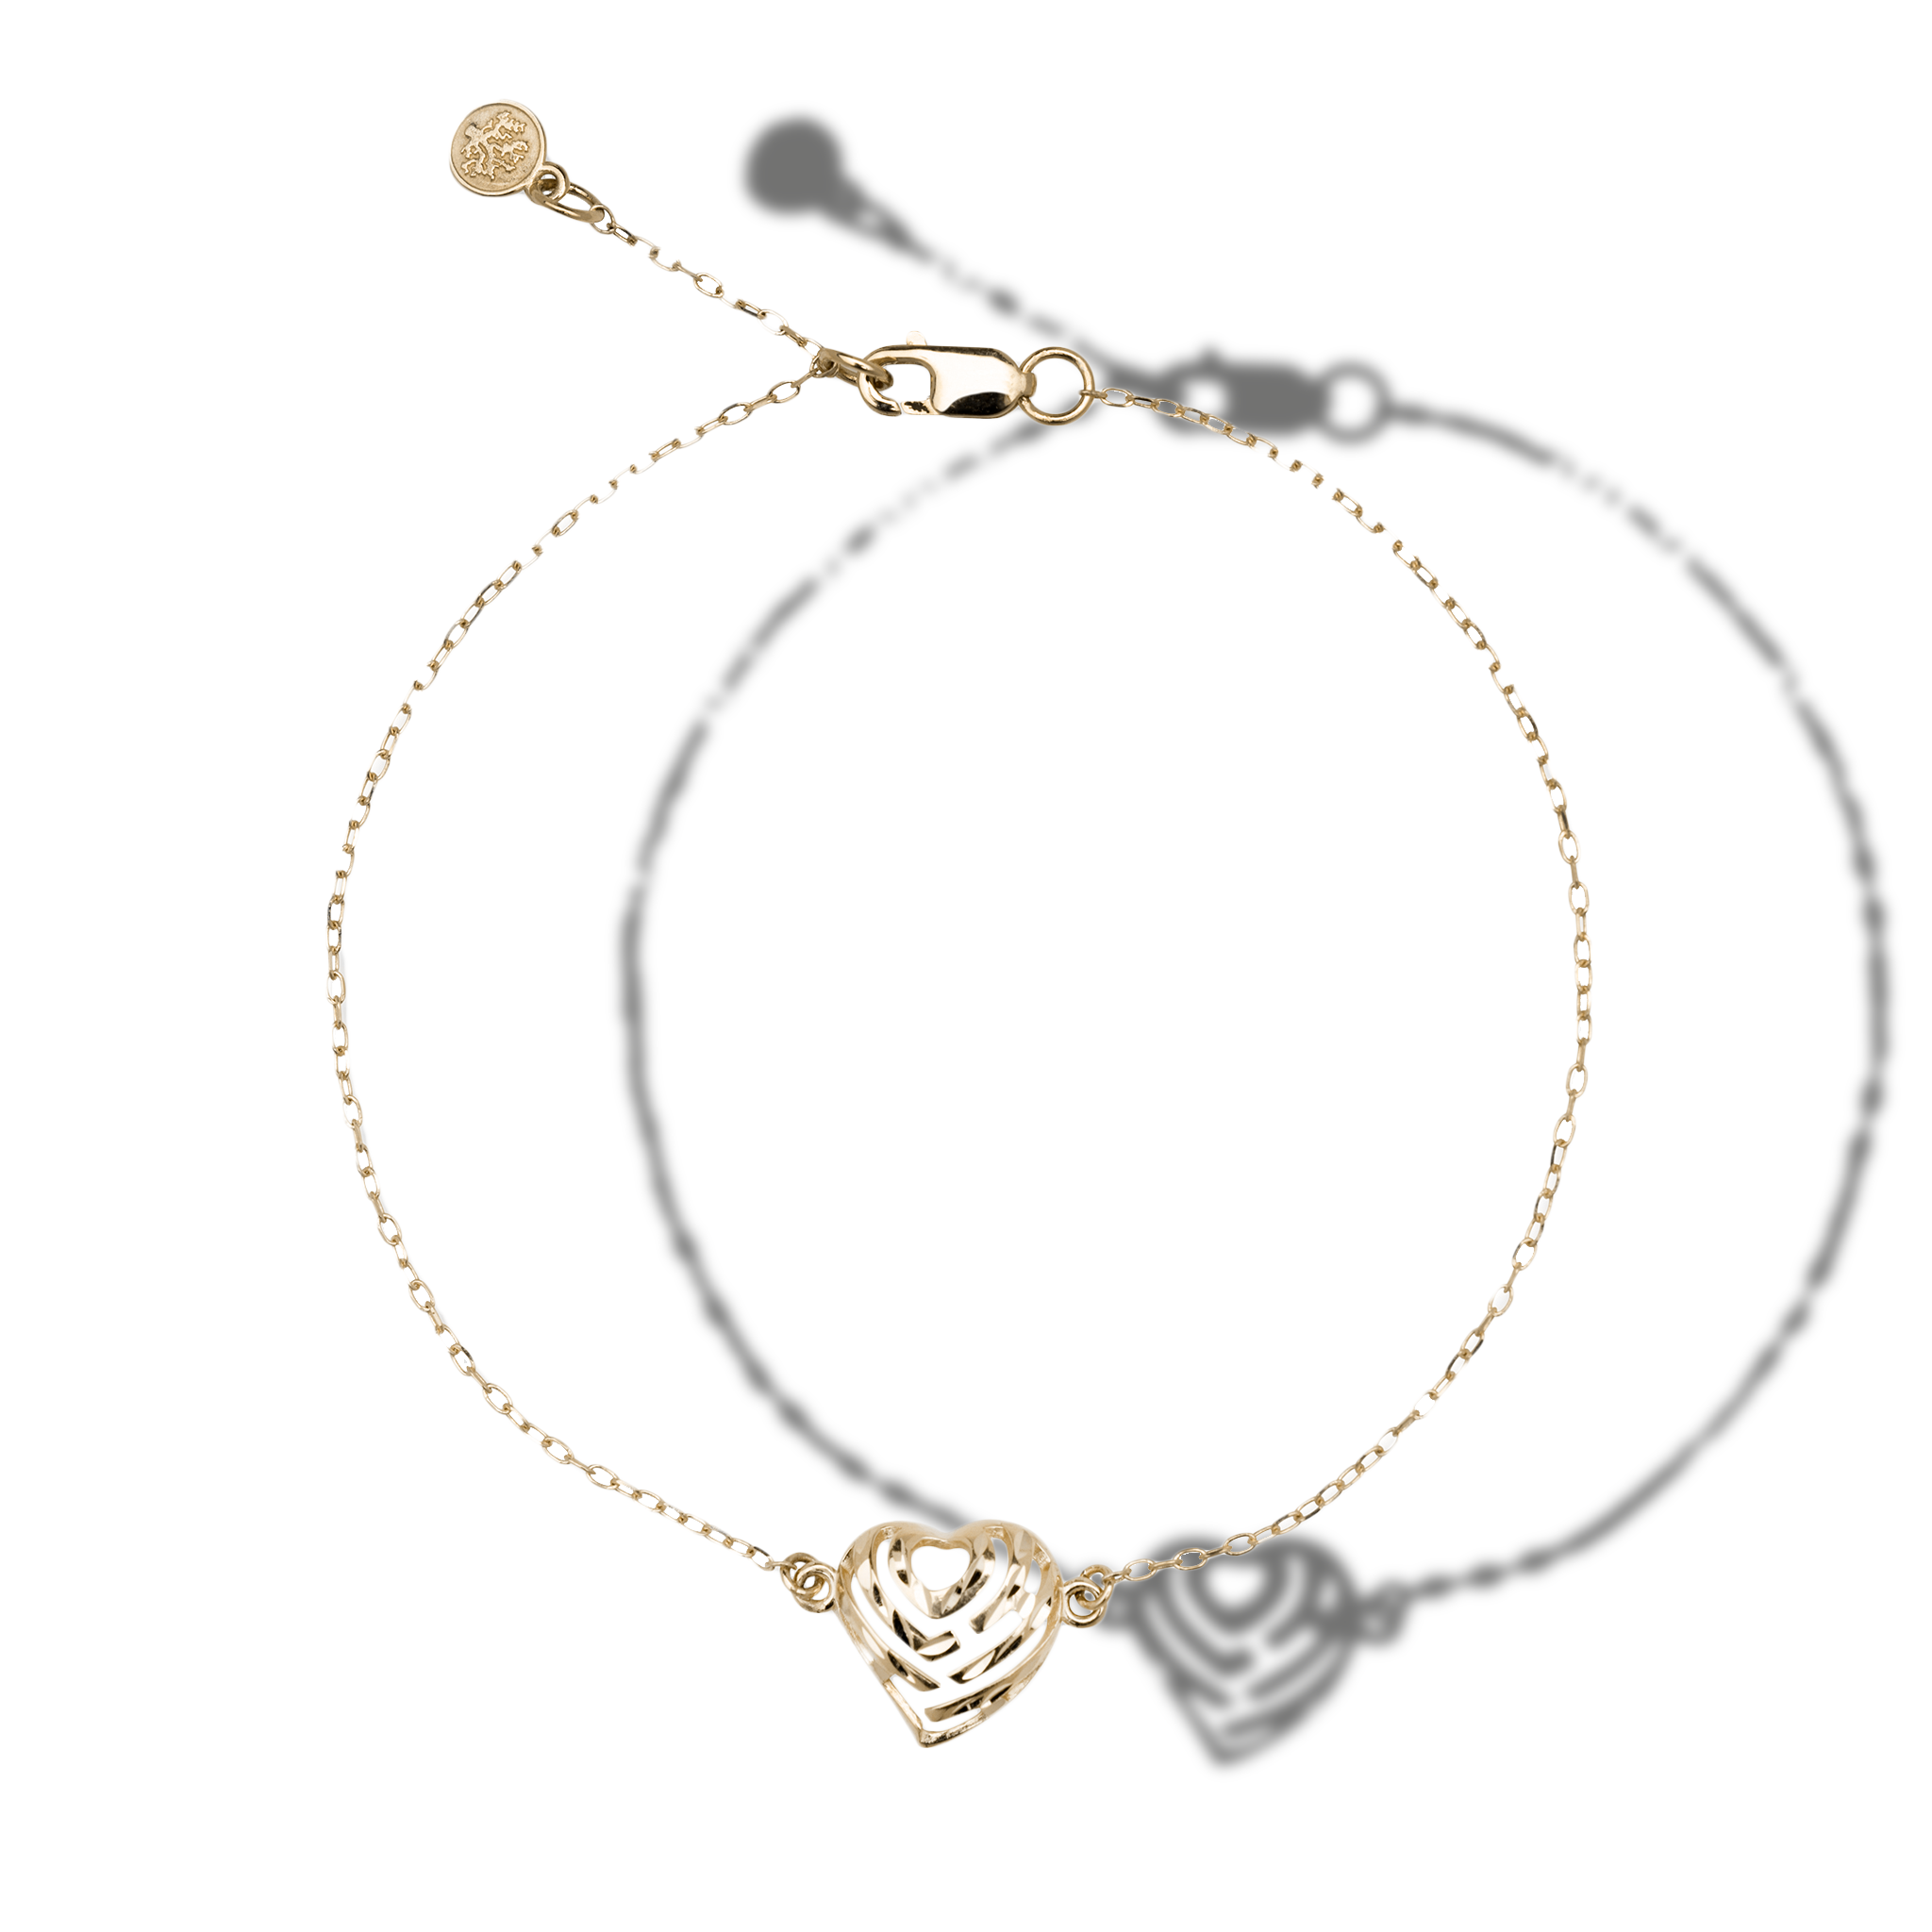 Adjustable Aloha Heart Bracelet in Gold - 11mm - Size 7-7.5